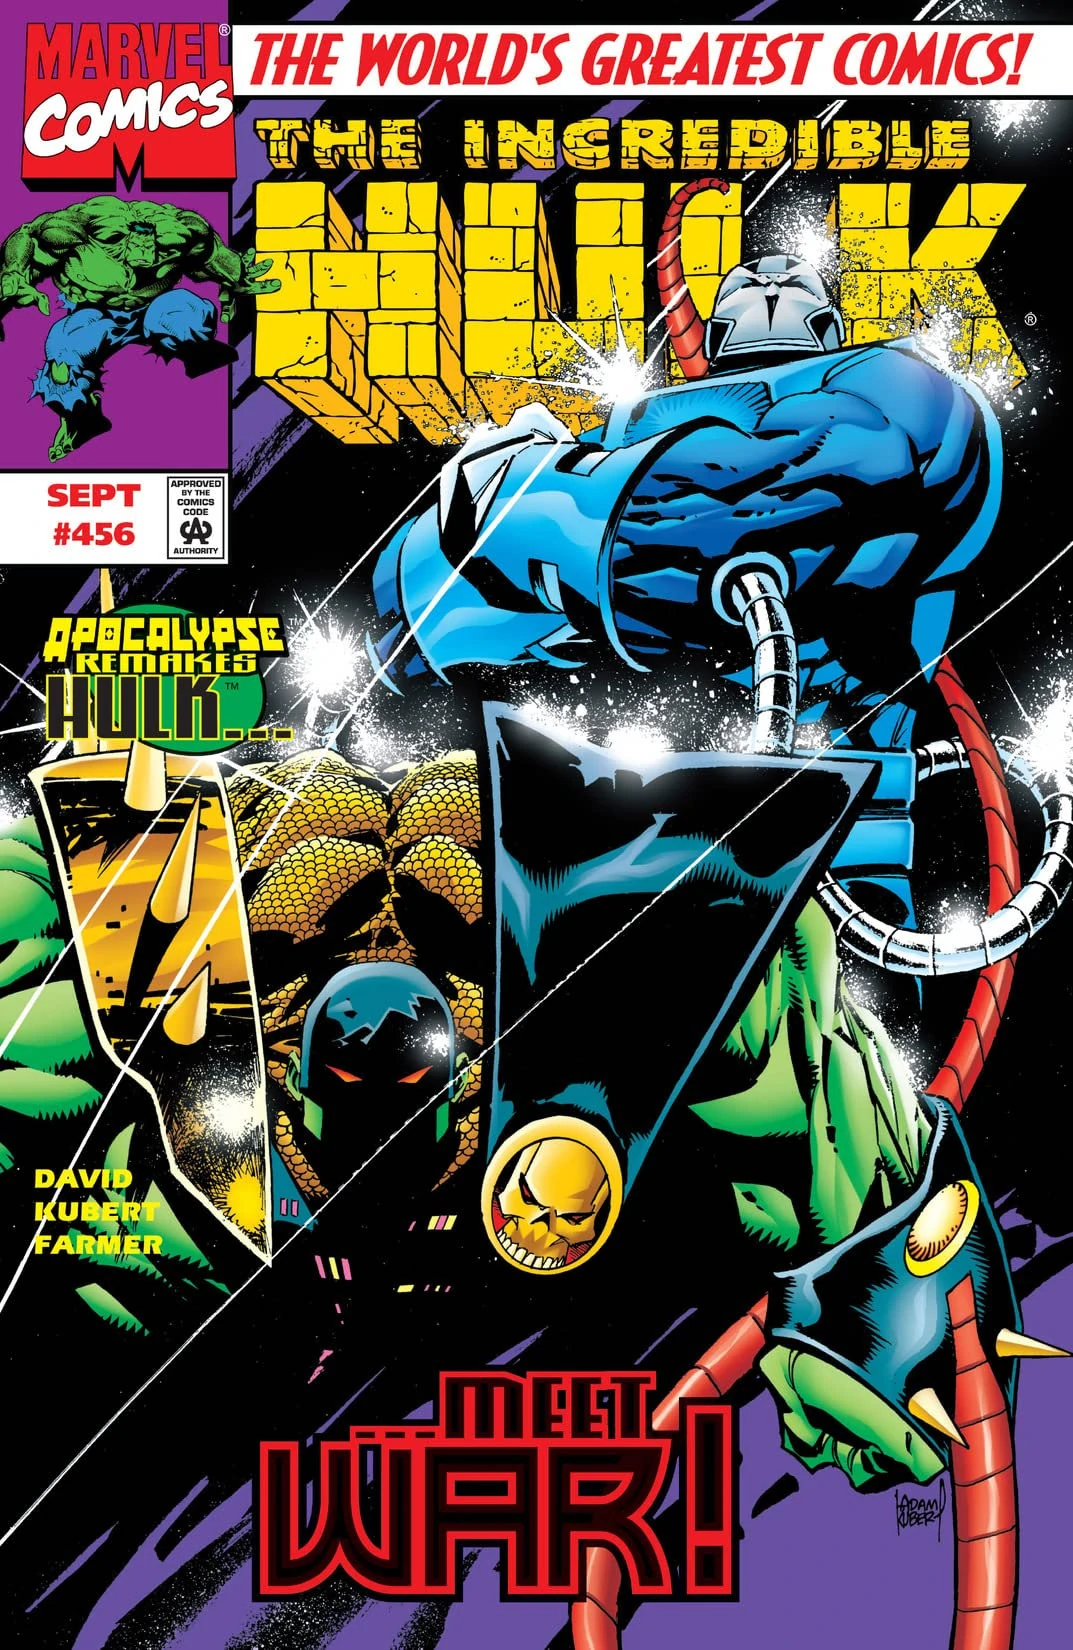 The Incredible Hulk #456